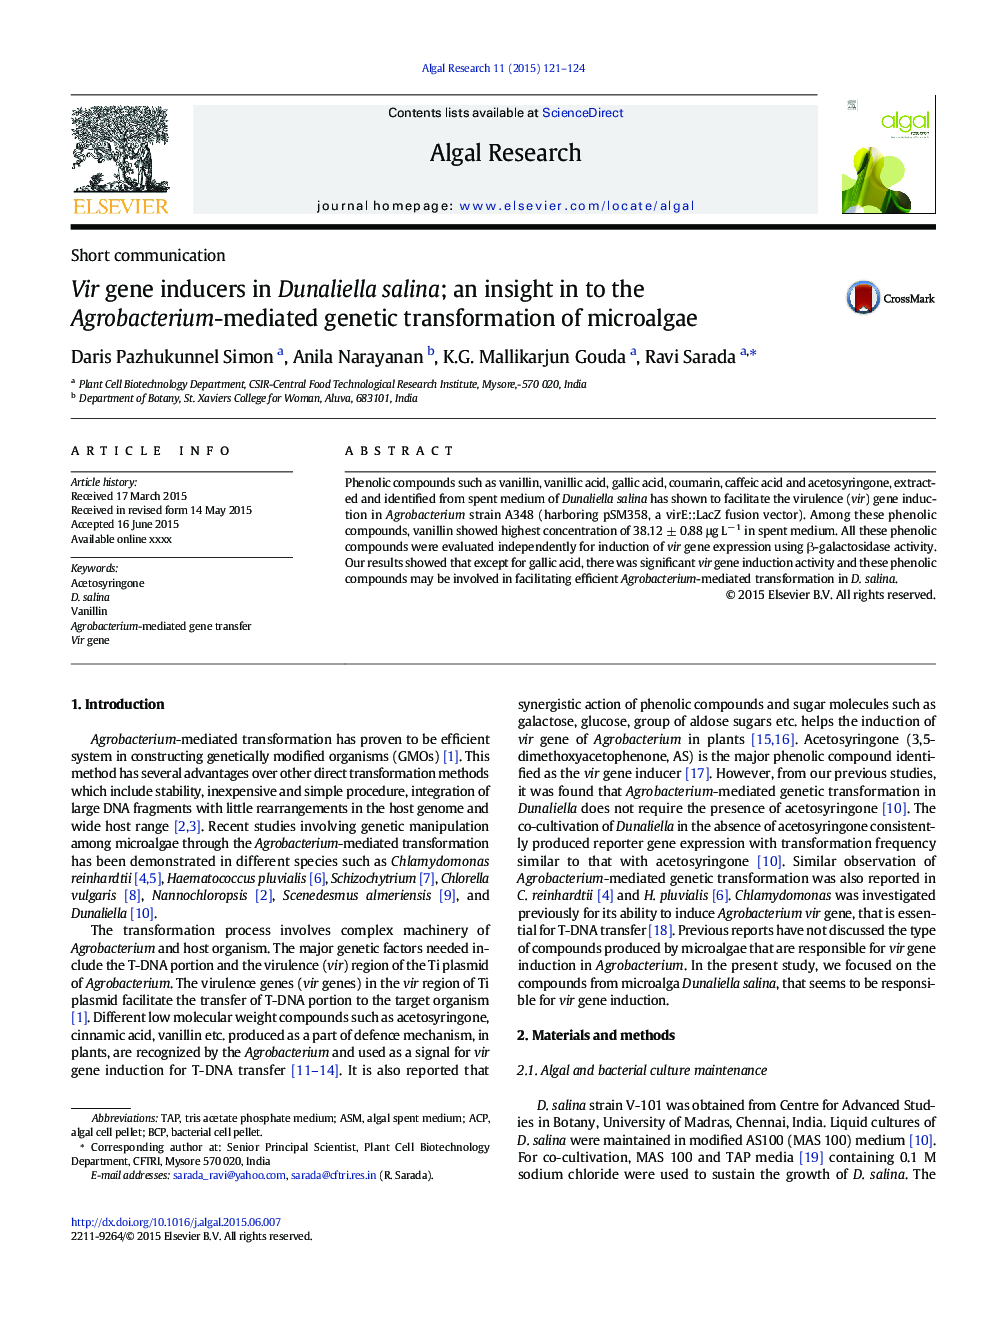 Vir gene inducers in Dunaliella salina; an insight in to the Agrobacterium-mediated genetic transformation of microalgae